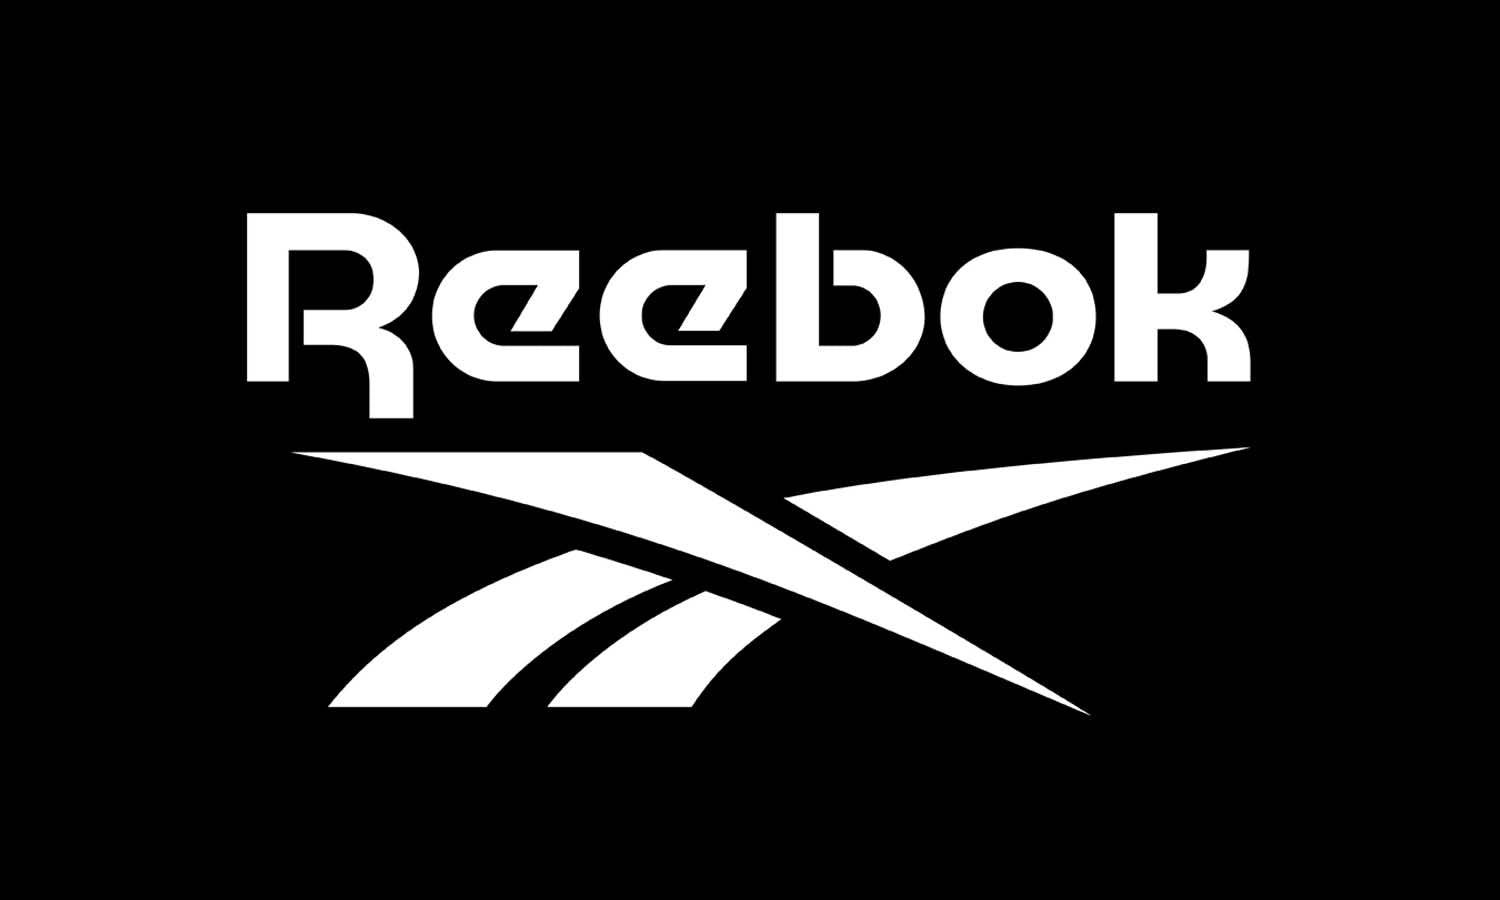 Reebok Logo Design: History & Evolution